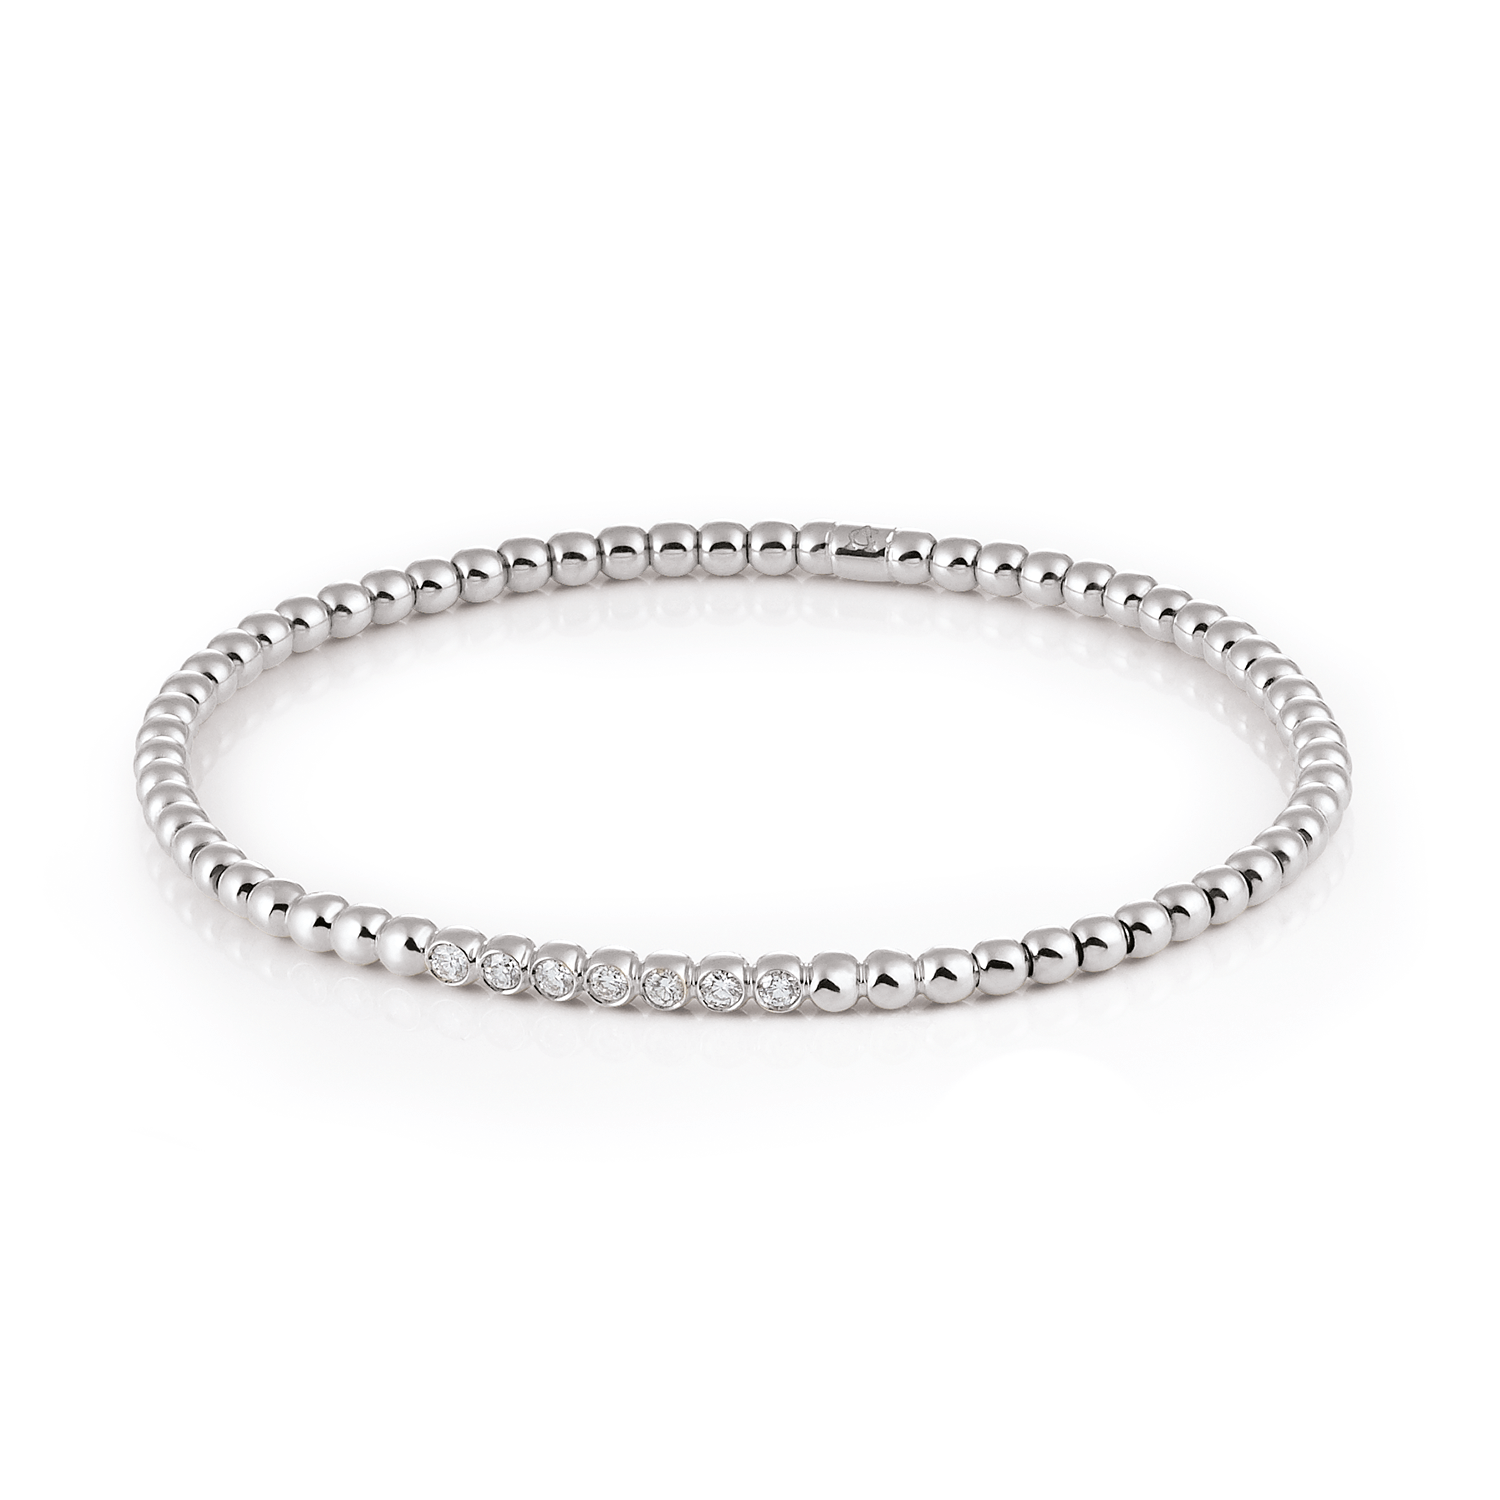 Al Coro Stretchy Bracelet in 18k White Gold with 7 Diamonds - Orsini Jewellers NZ